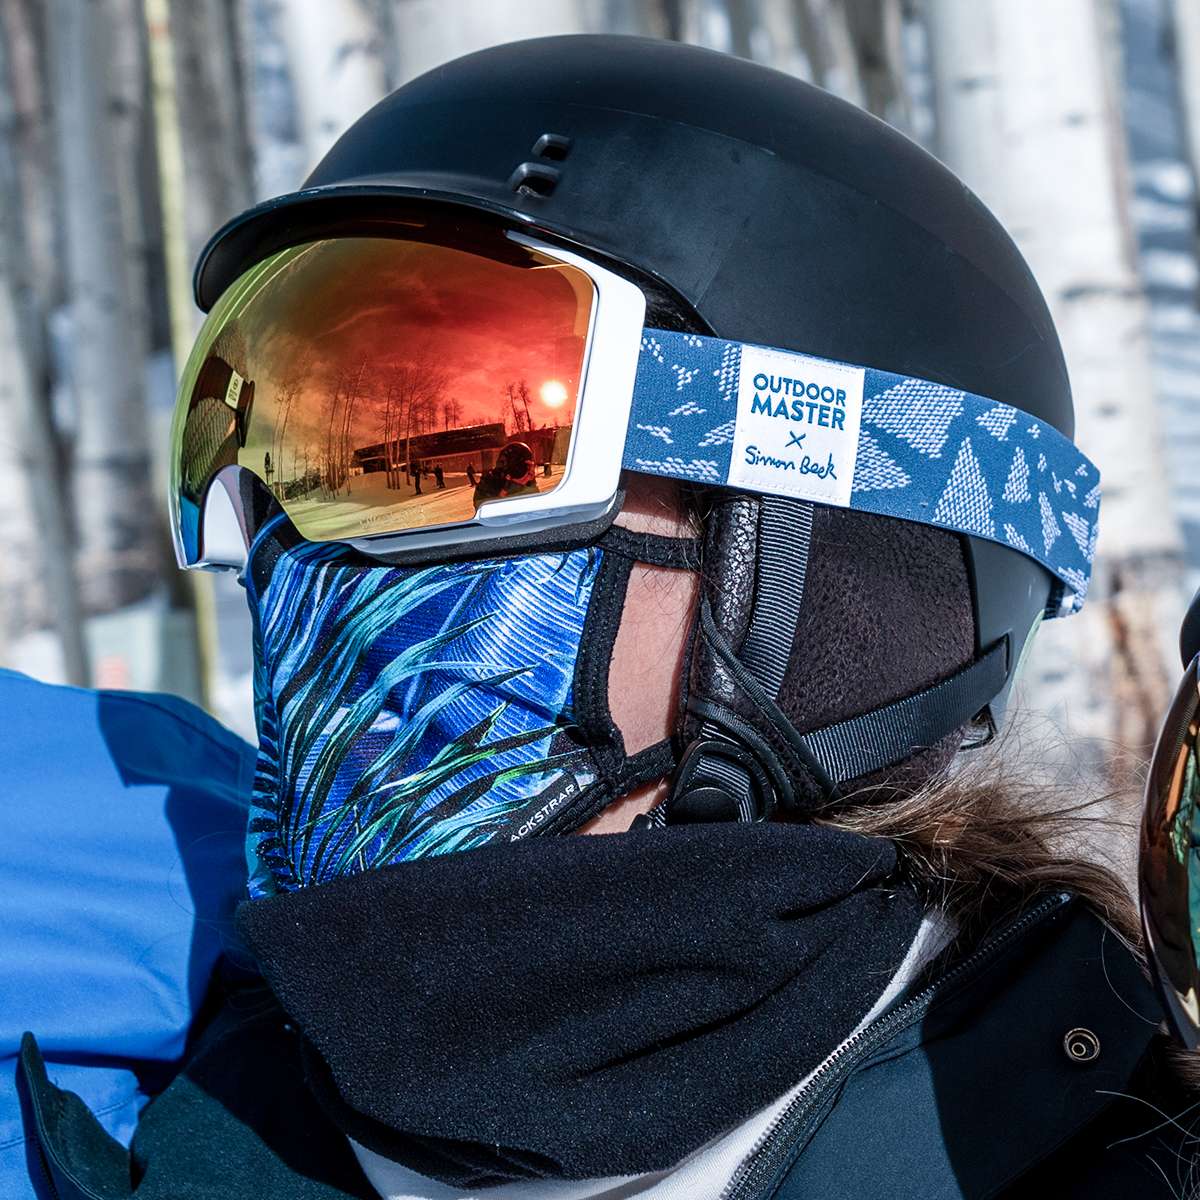 Head Solar Fmr Mirrored Ski Goggles Snowboard Goggles Frameless Goggle  Glasses